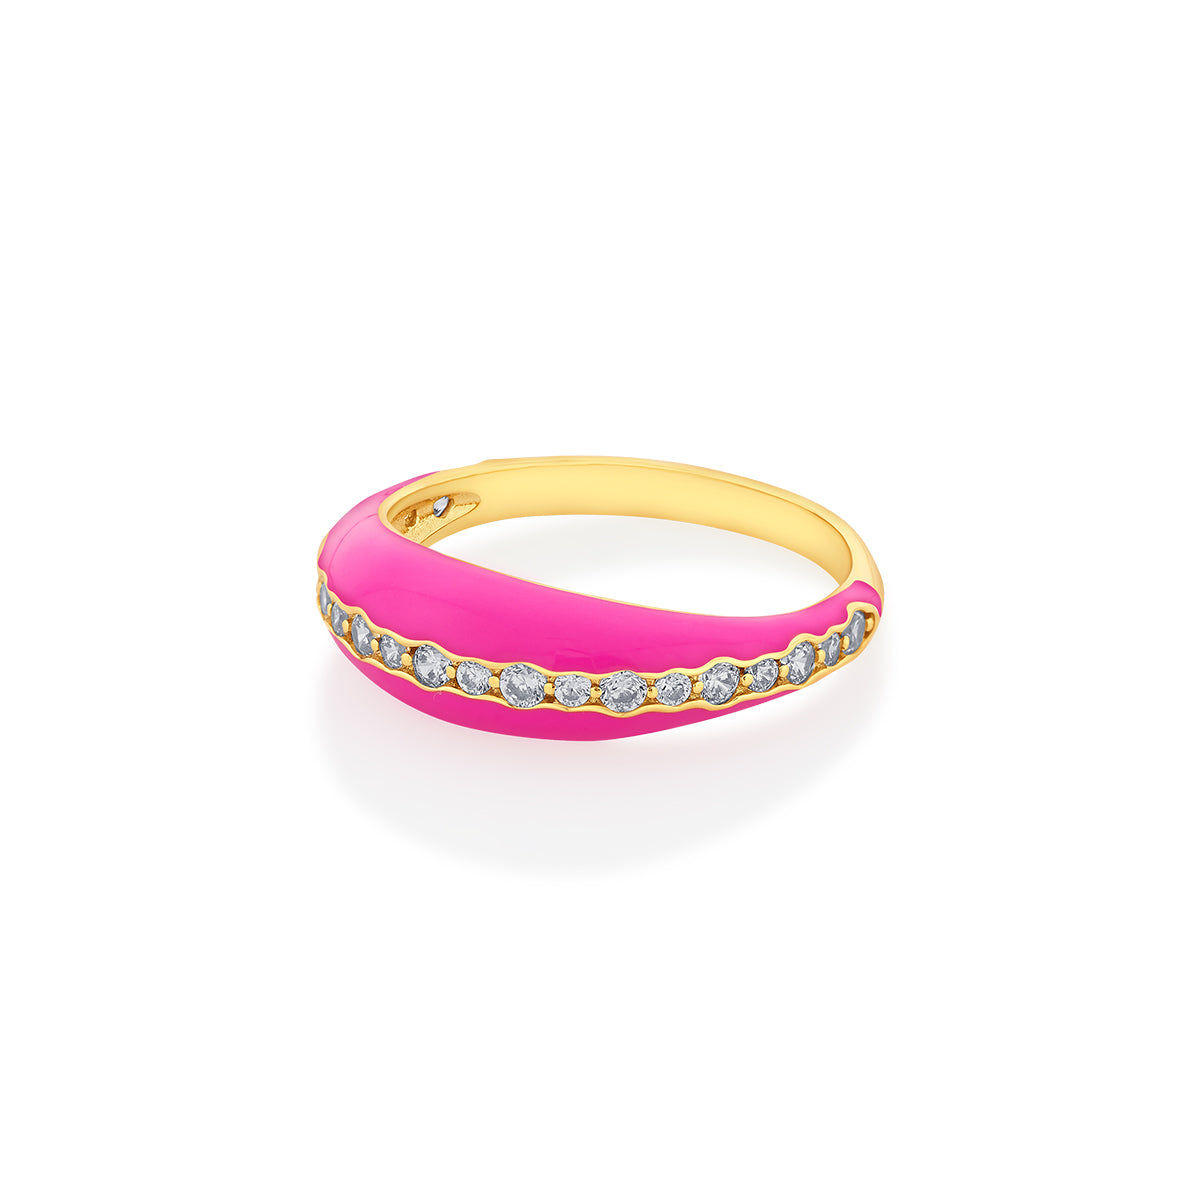 Rani Pink Sparkle Ring - Isharya | Modern Indian Jewelry